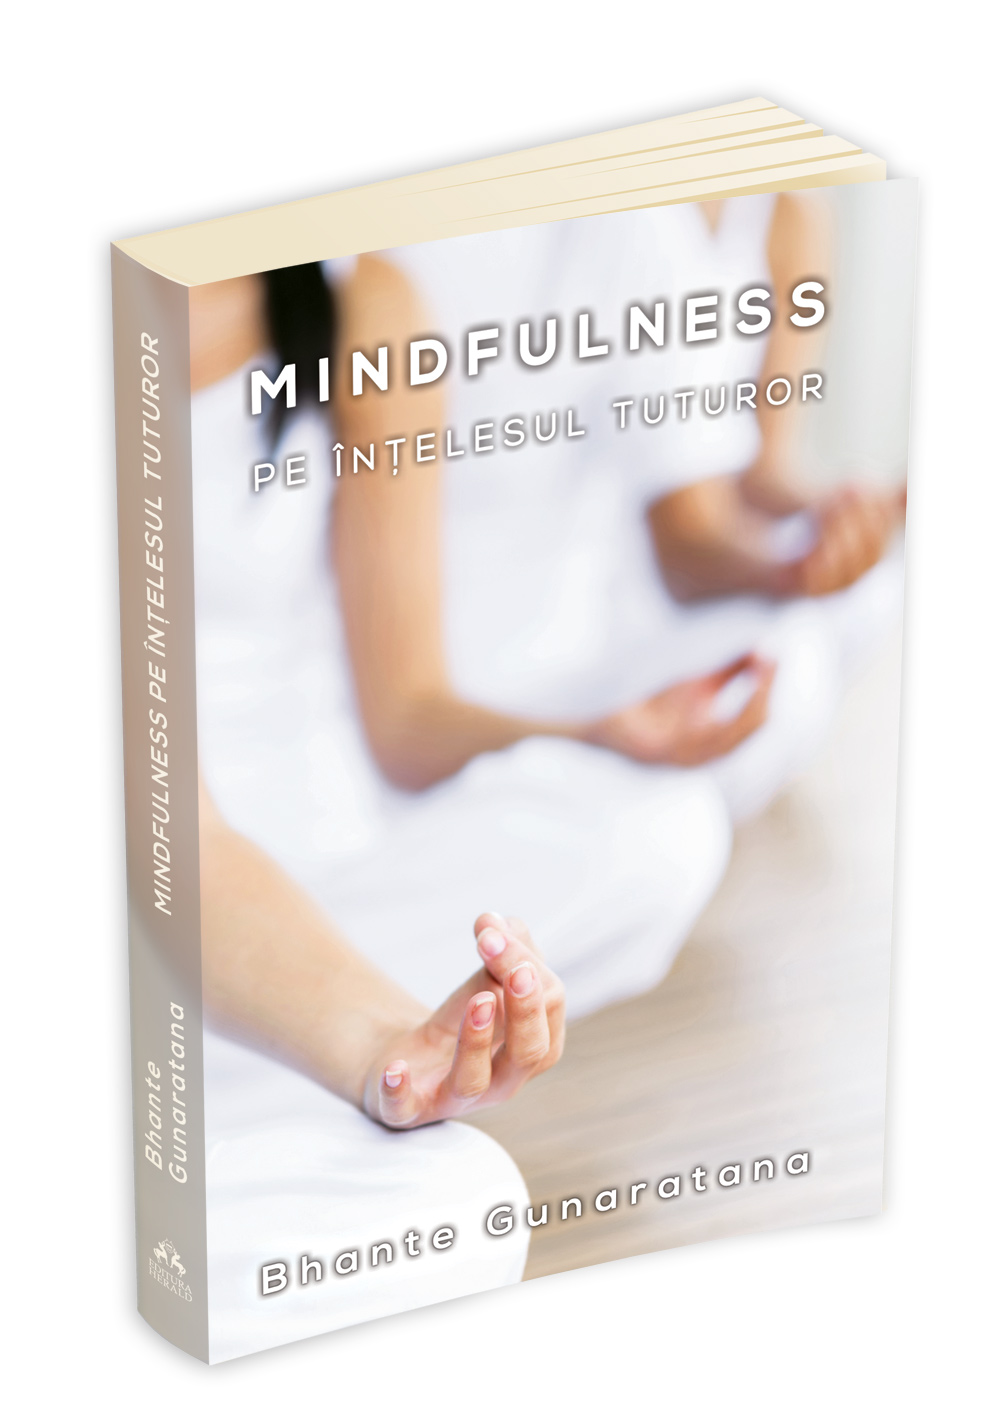 Mindfulness pe intelesul tuturor ed.2016 - Bhante Henepola Gunaratana